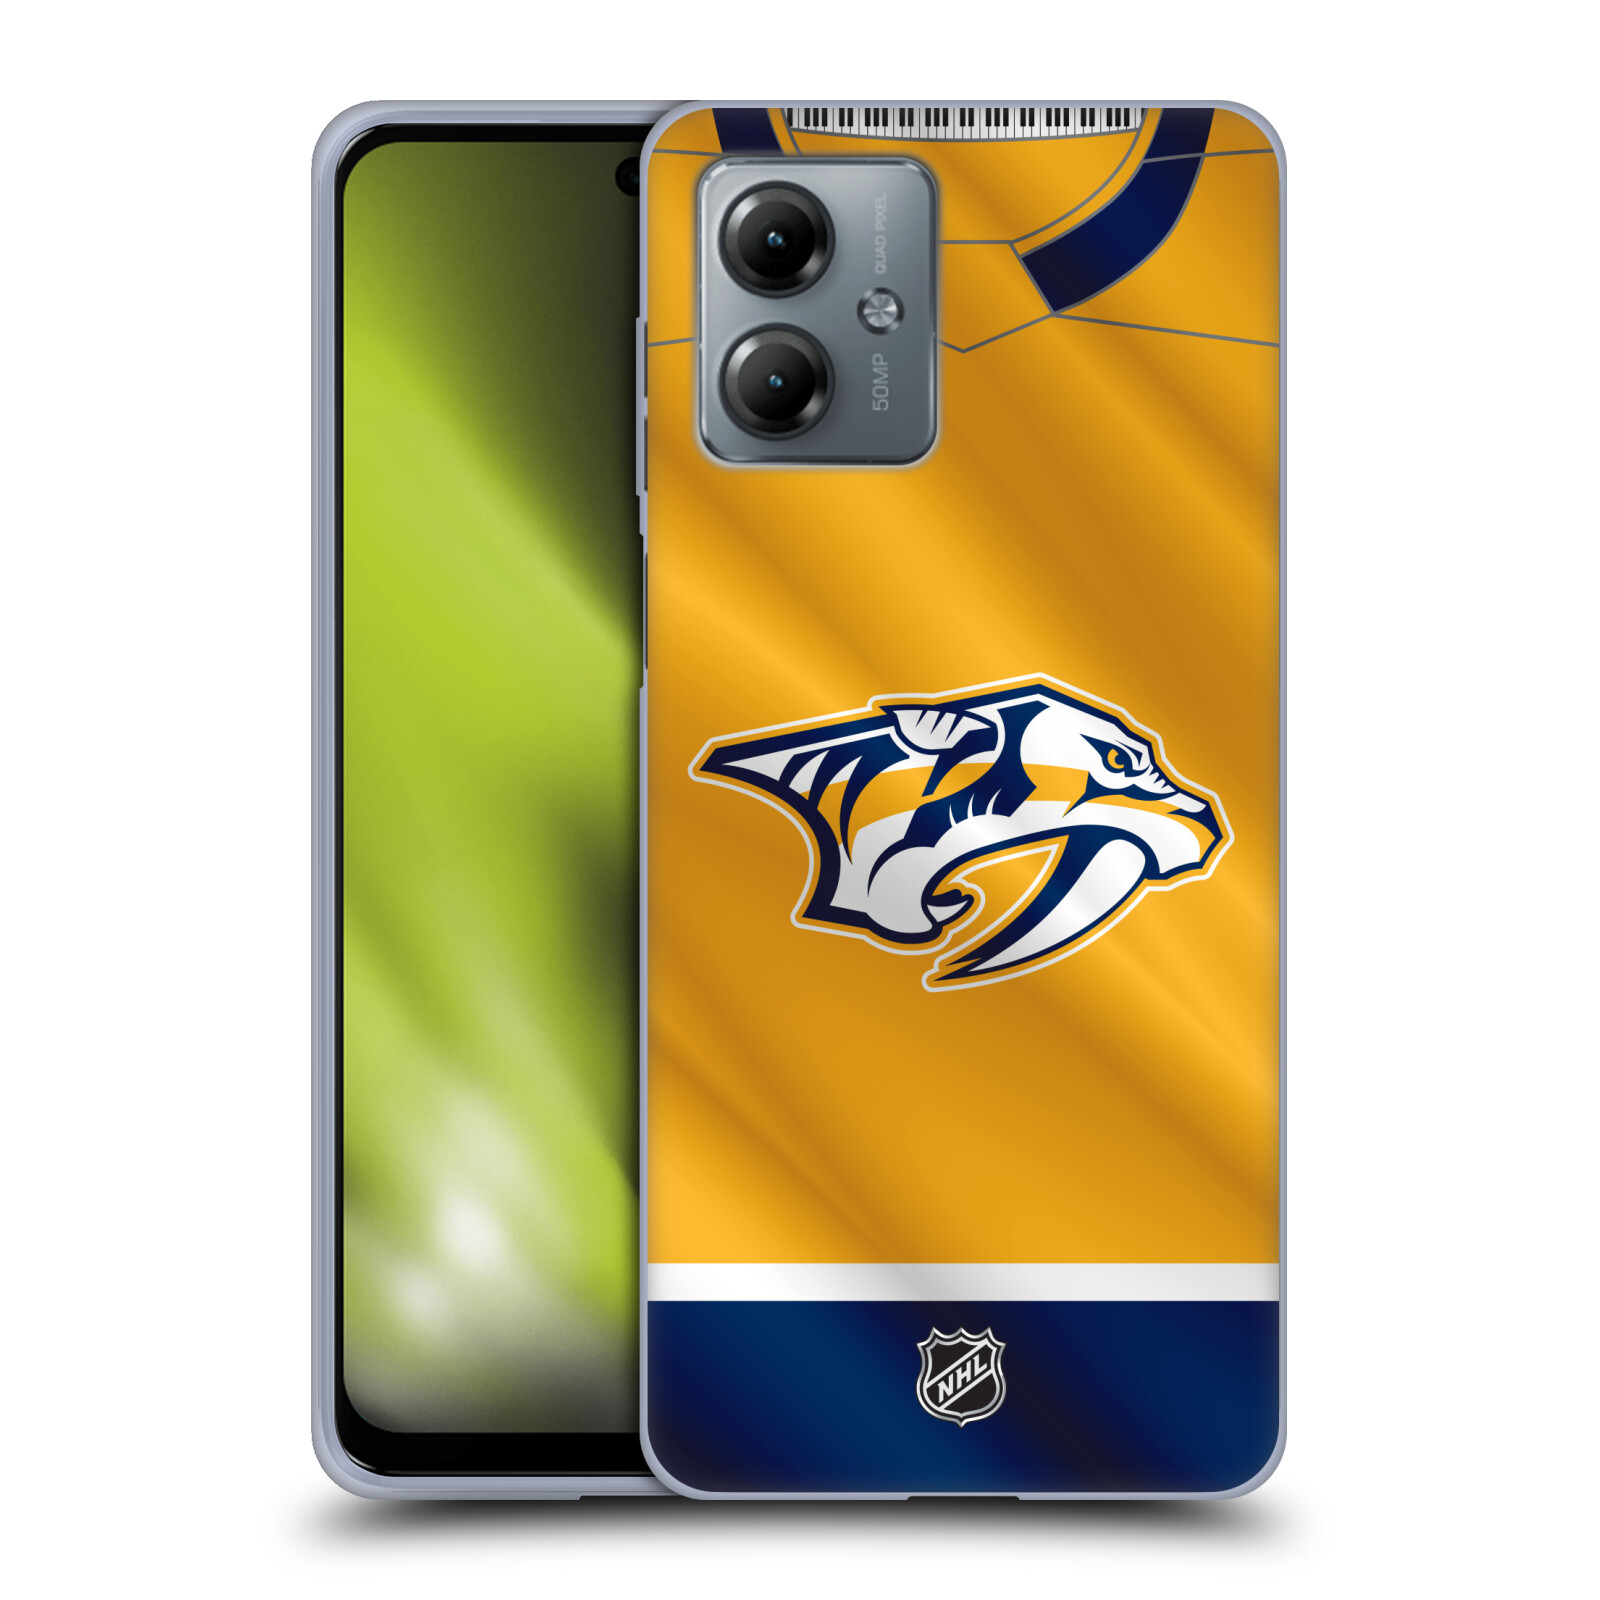 Silikonové pouzdro na mobil Motorola Moto G14 - NHL - Dres Nashville Predators (Silikonový kryt, obal, pouzdro na mobilní telefon Motorola Moto G14 s licencovaným motivem NHL - Dres Nashville Predators)